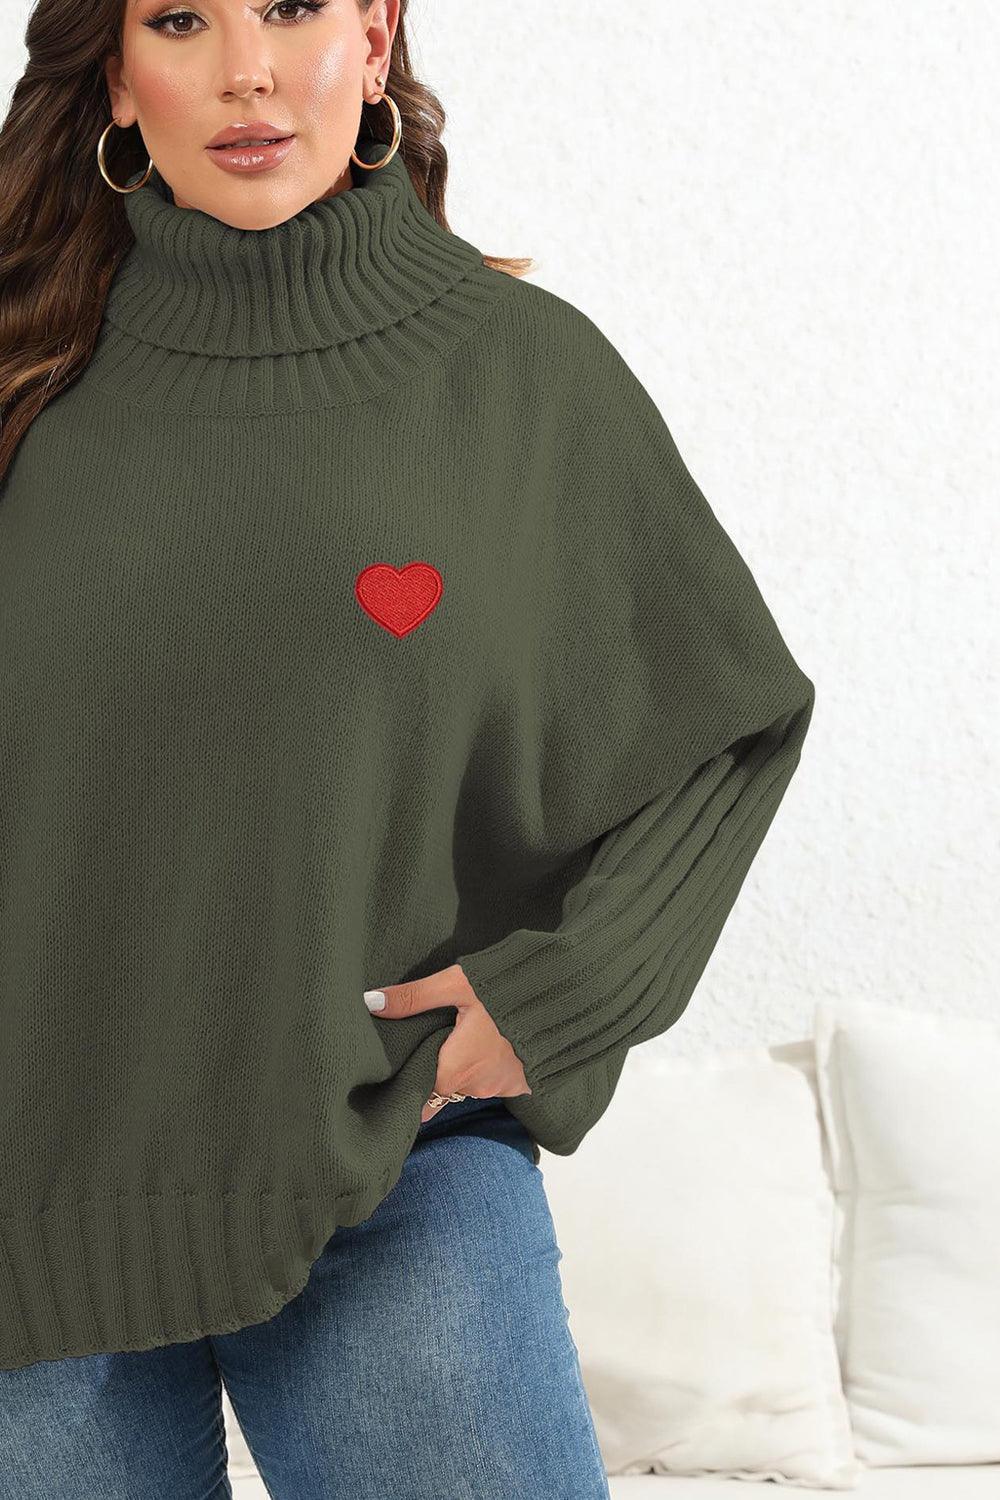 Heart Graphic Turtle Neck Plus Size Womens Sweater - MXSTUDIO.COM